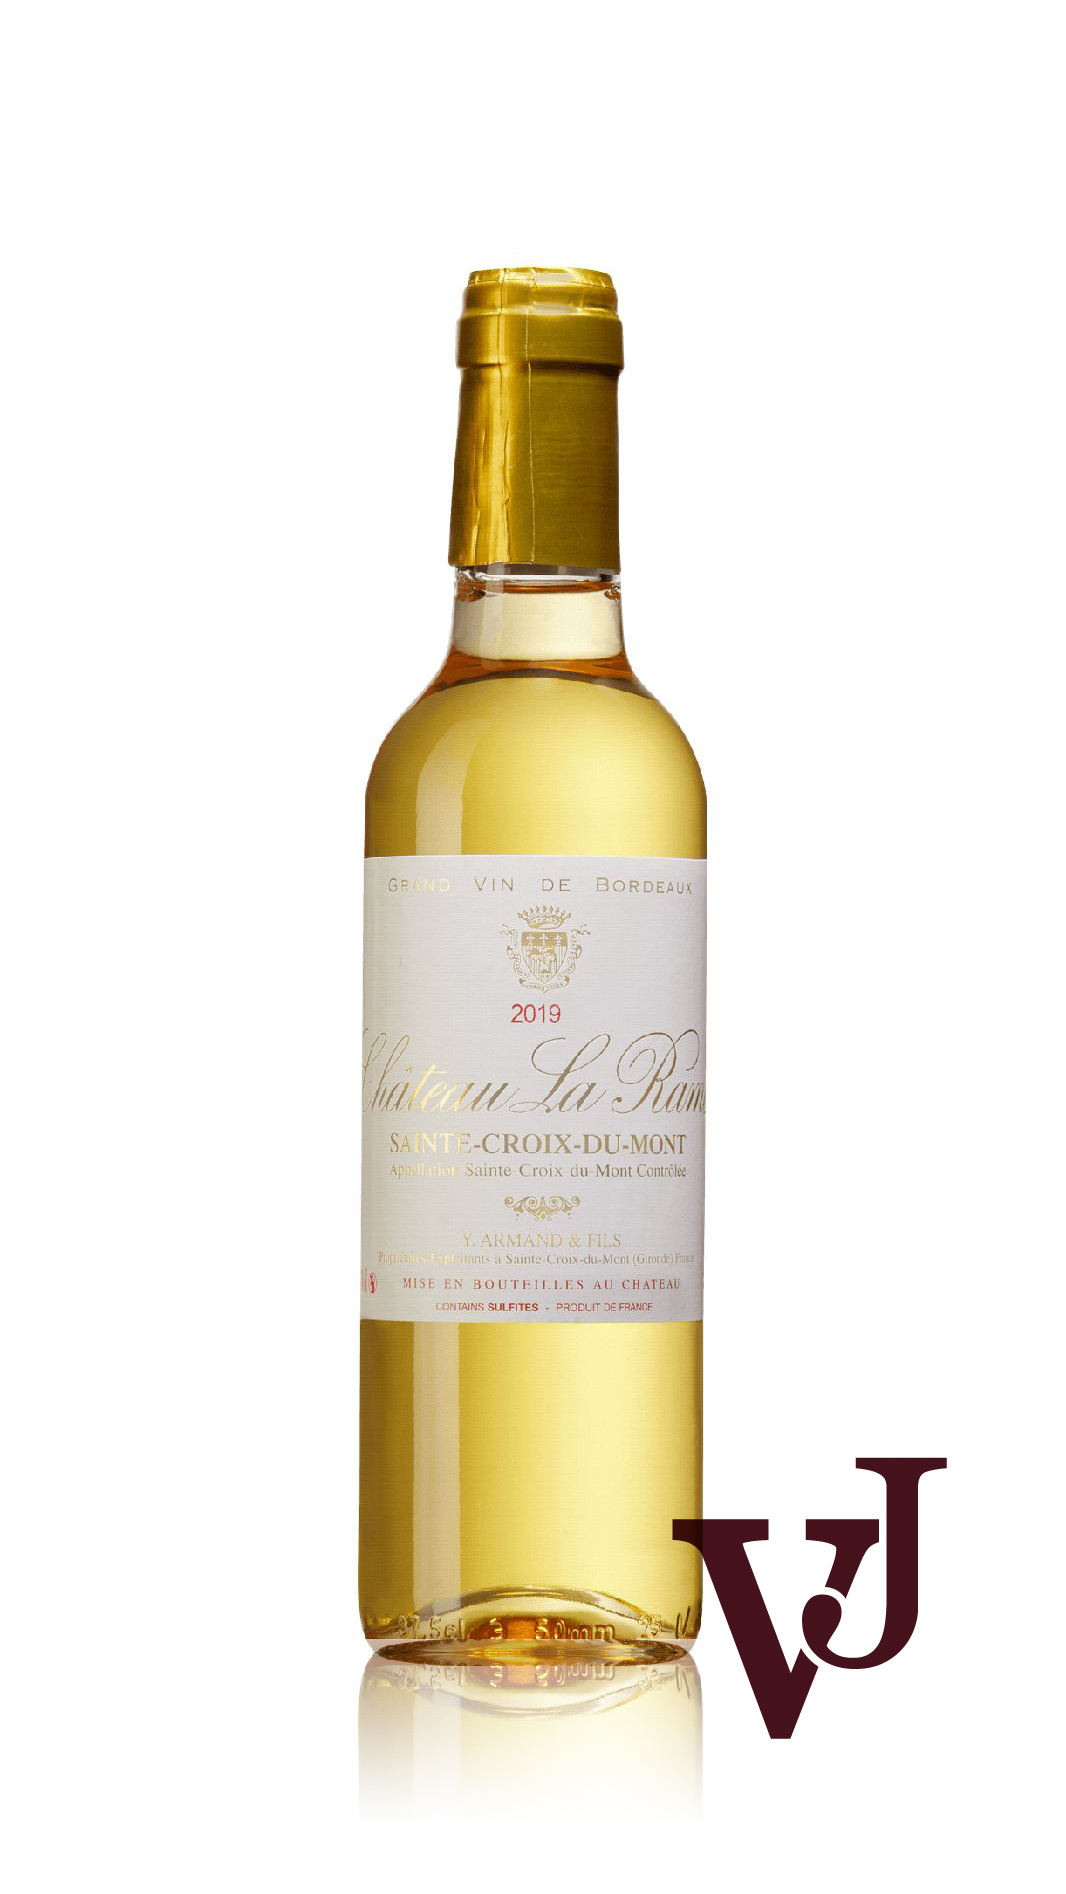 Vitt Vin - Château La Rame 2019 artikel nummer 796202 från producenten Chateau La Rame från området Frankrike